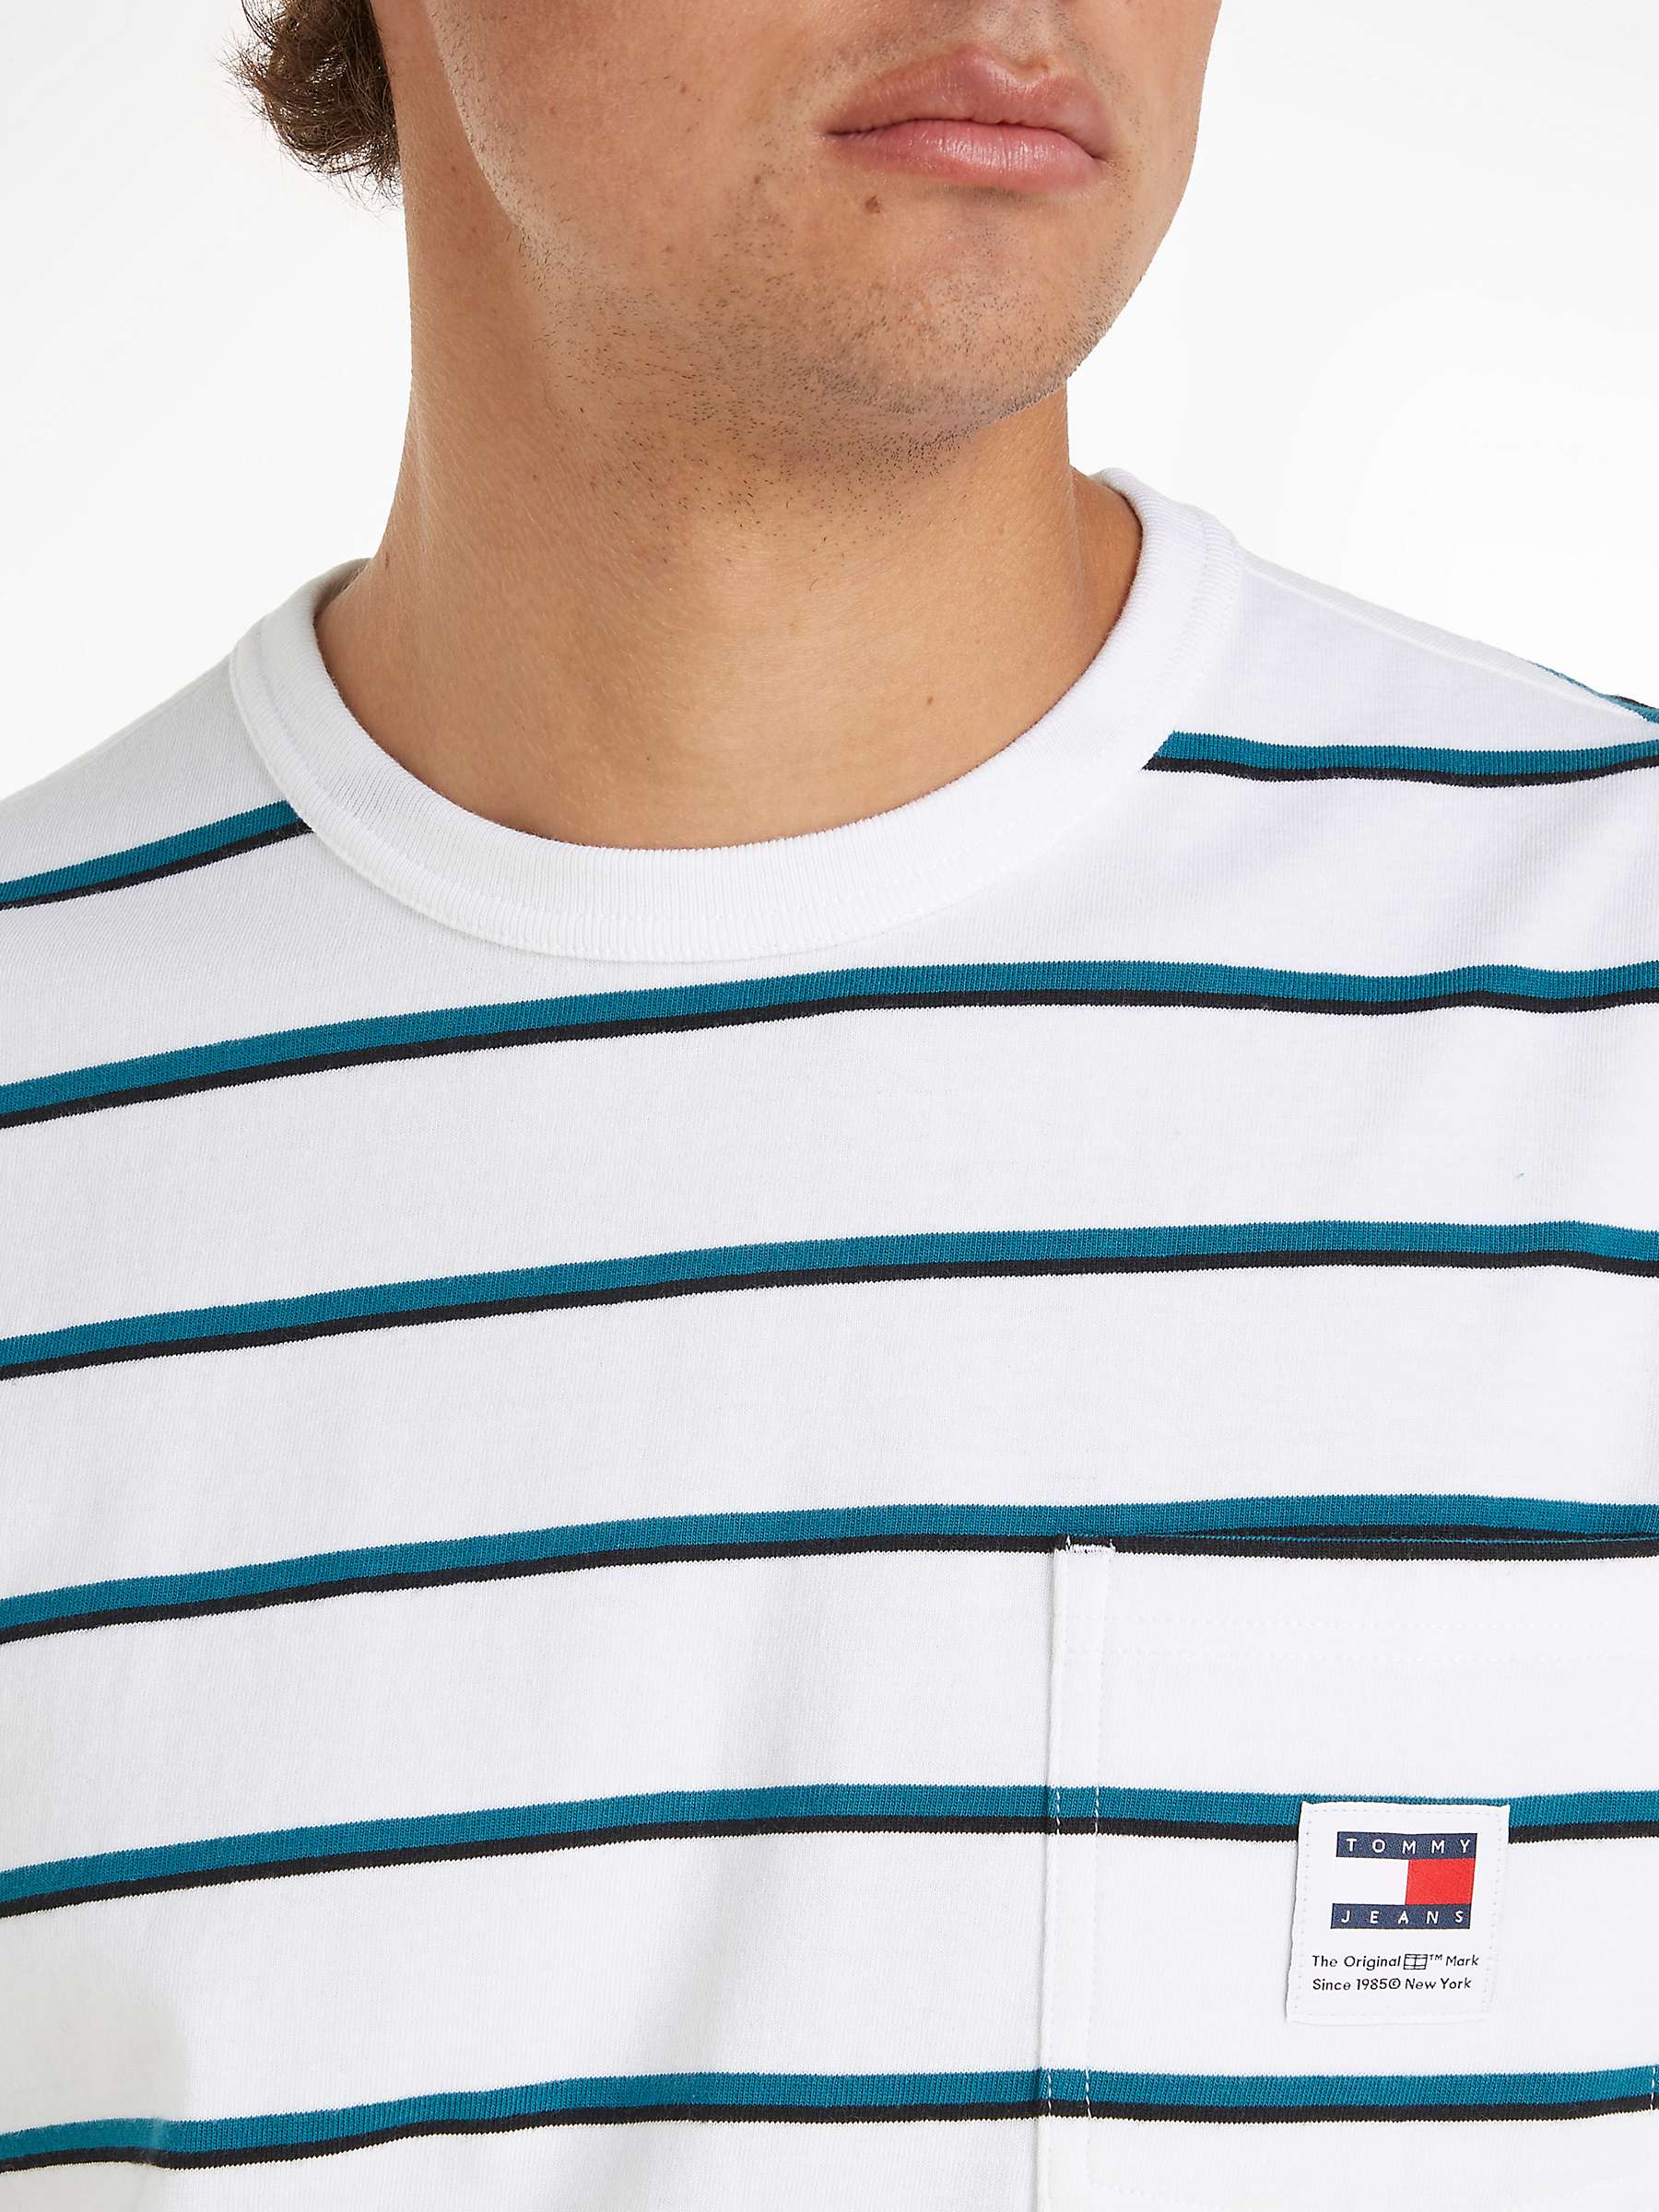 Buy Tommy Hilfiger Easy Stripe T-Shirt, White/Blue Online at johnlewis.com